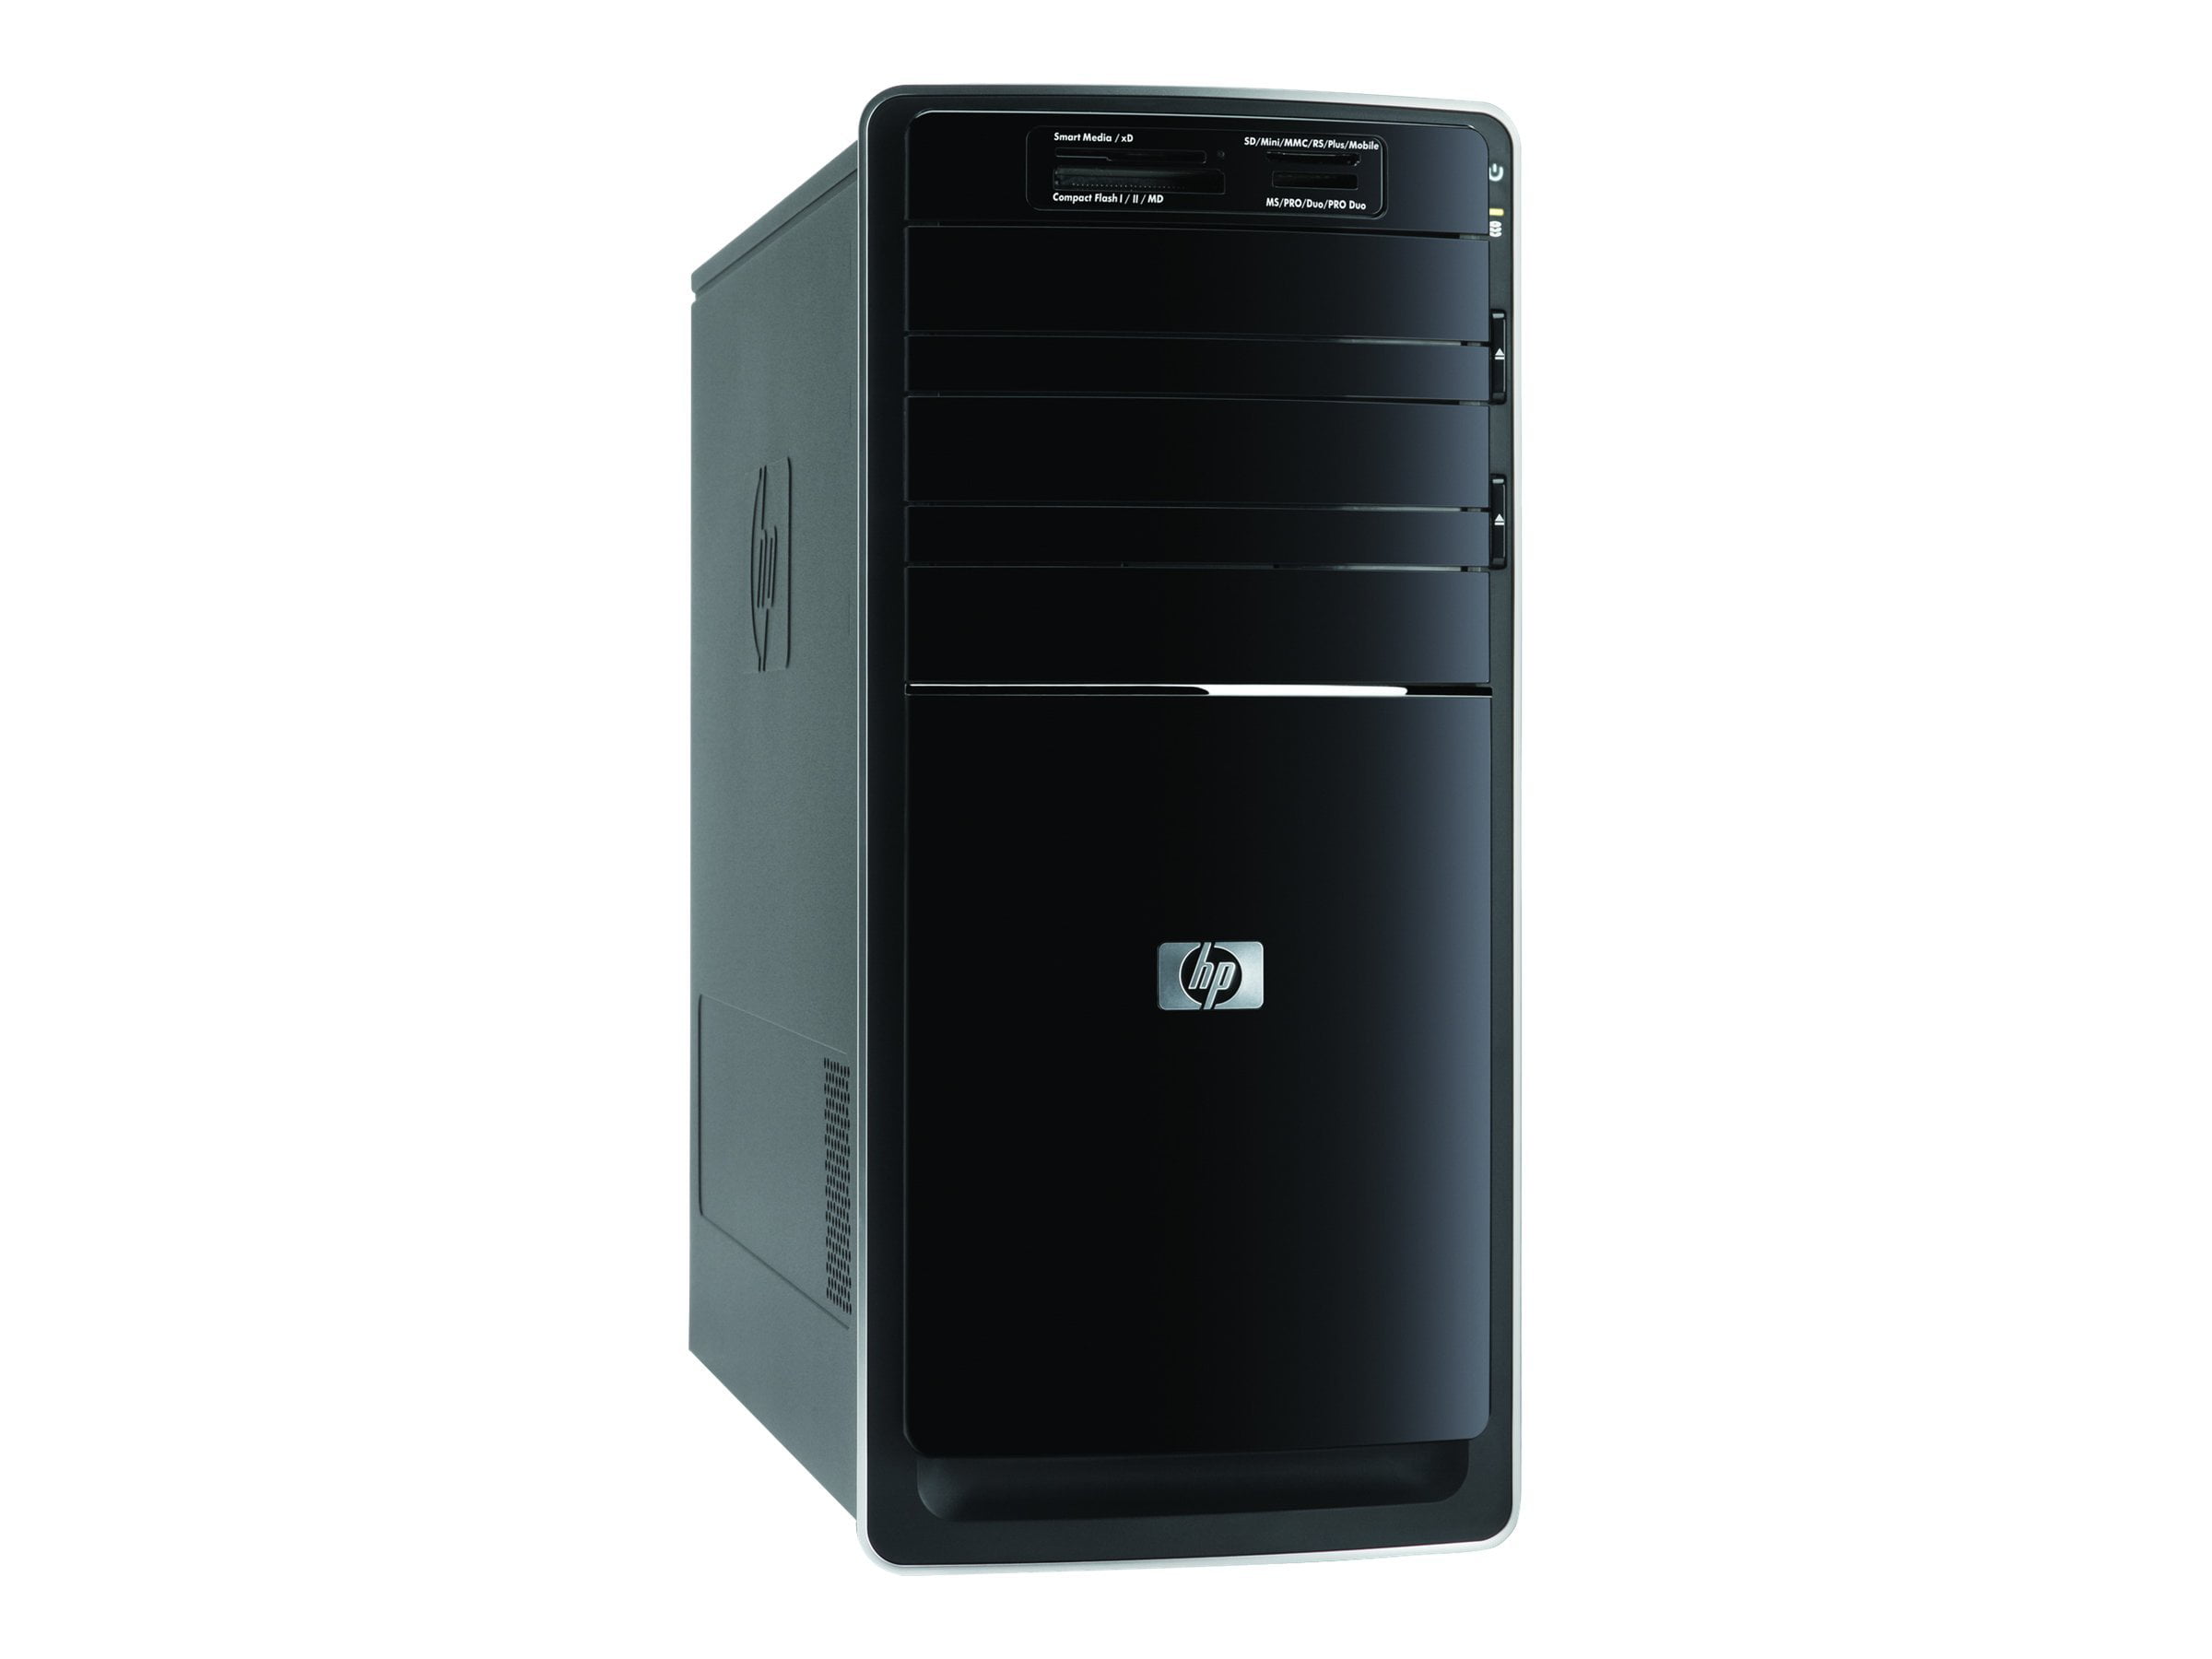 HP Pavilion p6707c - Tower - Athlon II X2 250 / 3 GHz - RAM 4 GB - HDD 750  GB - DVD SuperMulti - GF 6150 SE - Win 7 Home Premium 64-bit - monitor: